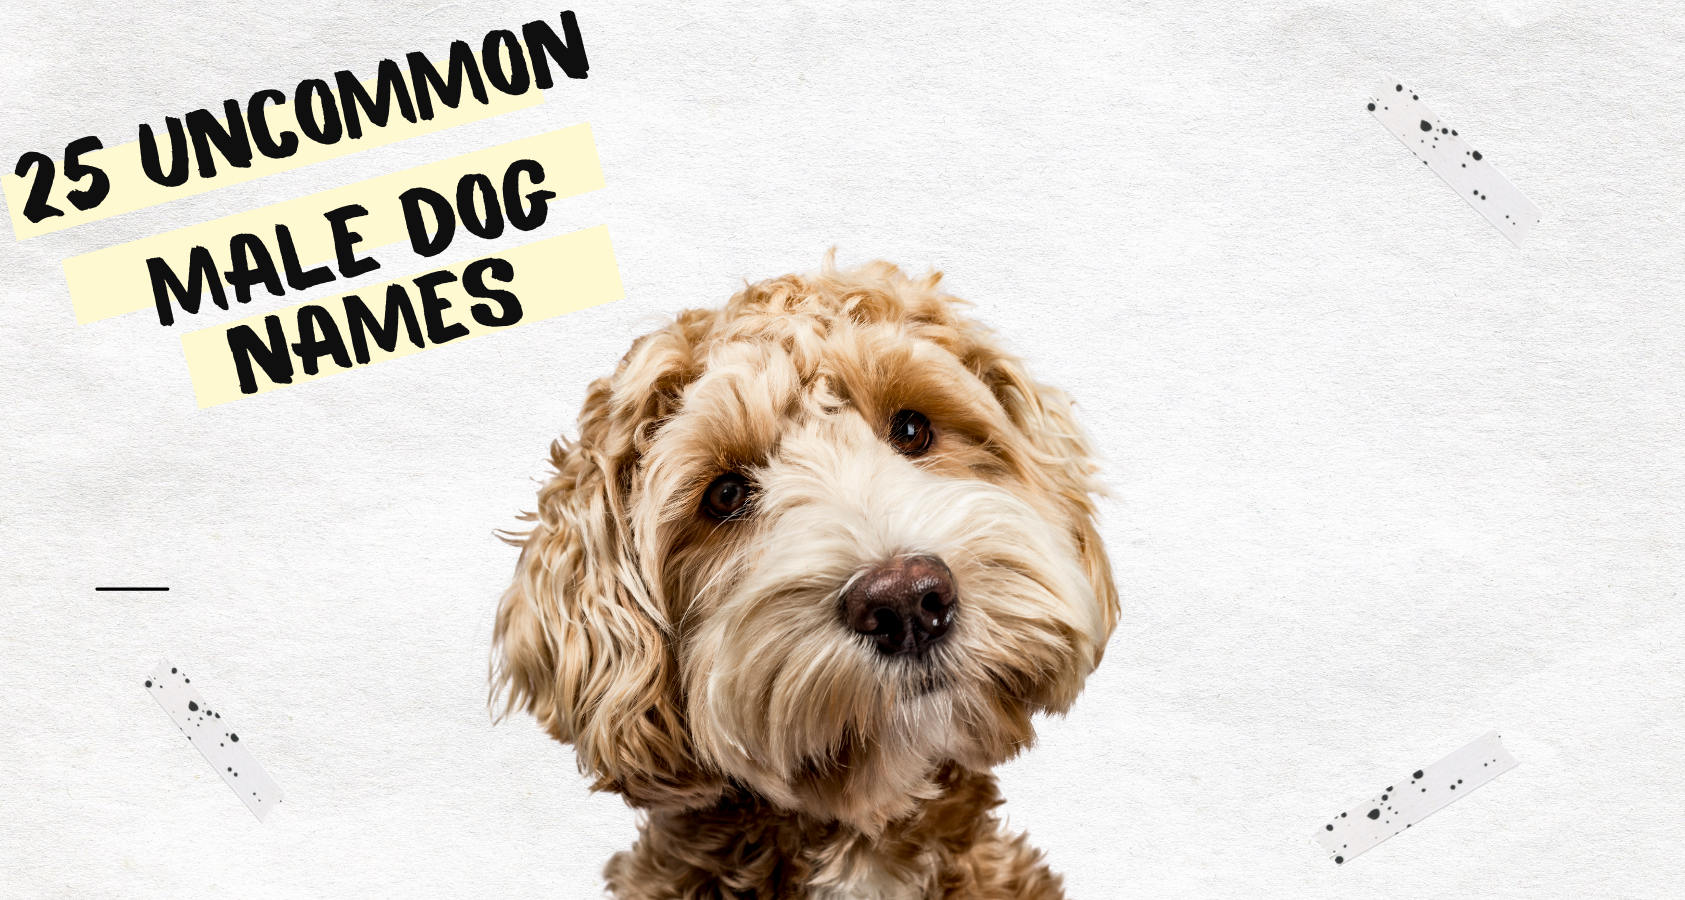 uncommon male dog names